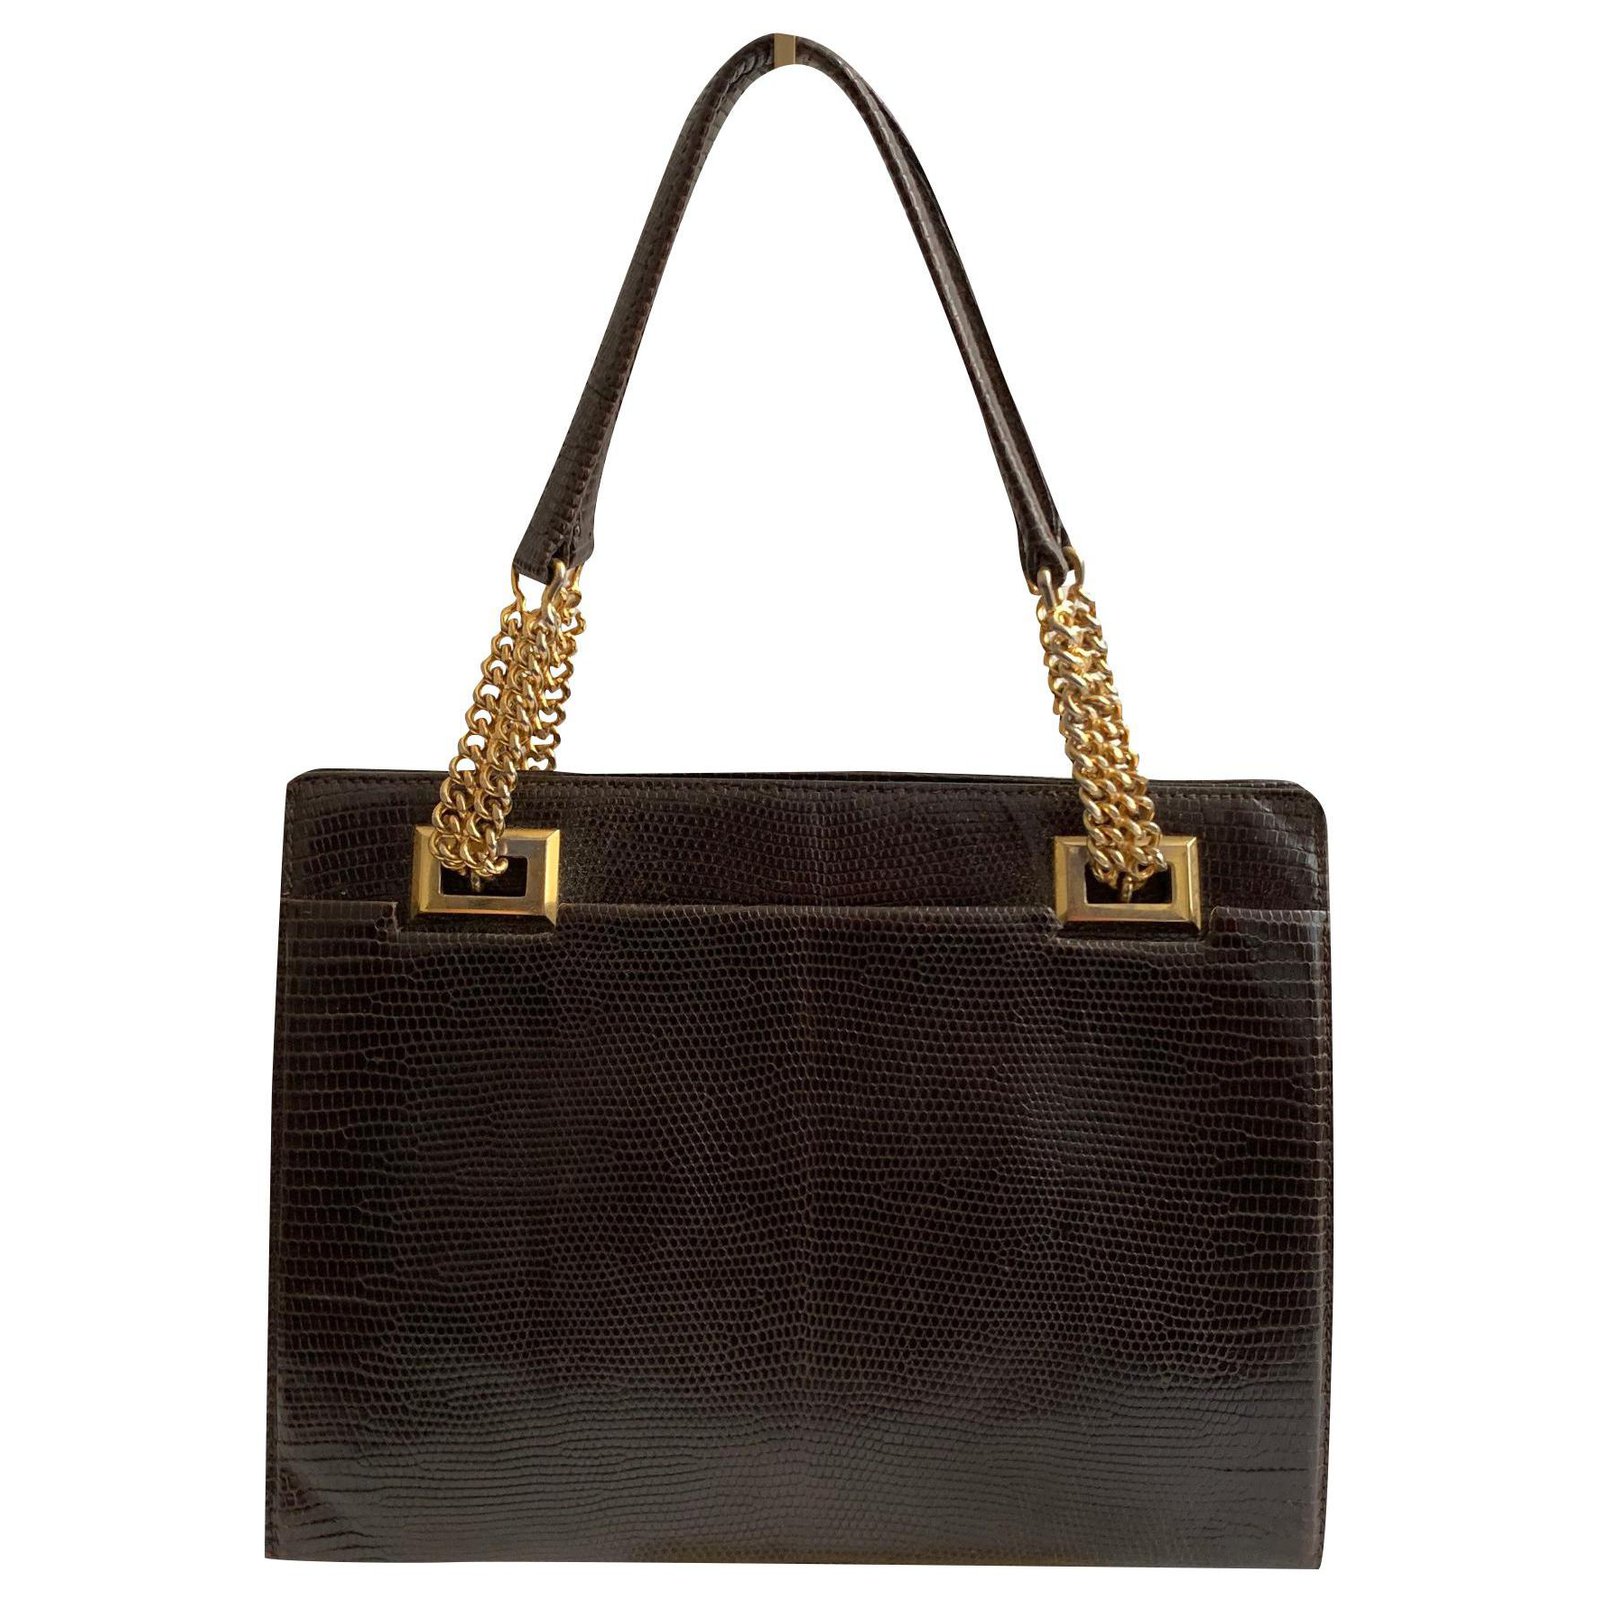 super 70's purses  Trendy purses, Vintage handbags, Vintage bags